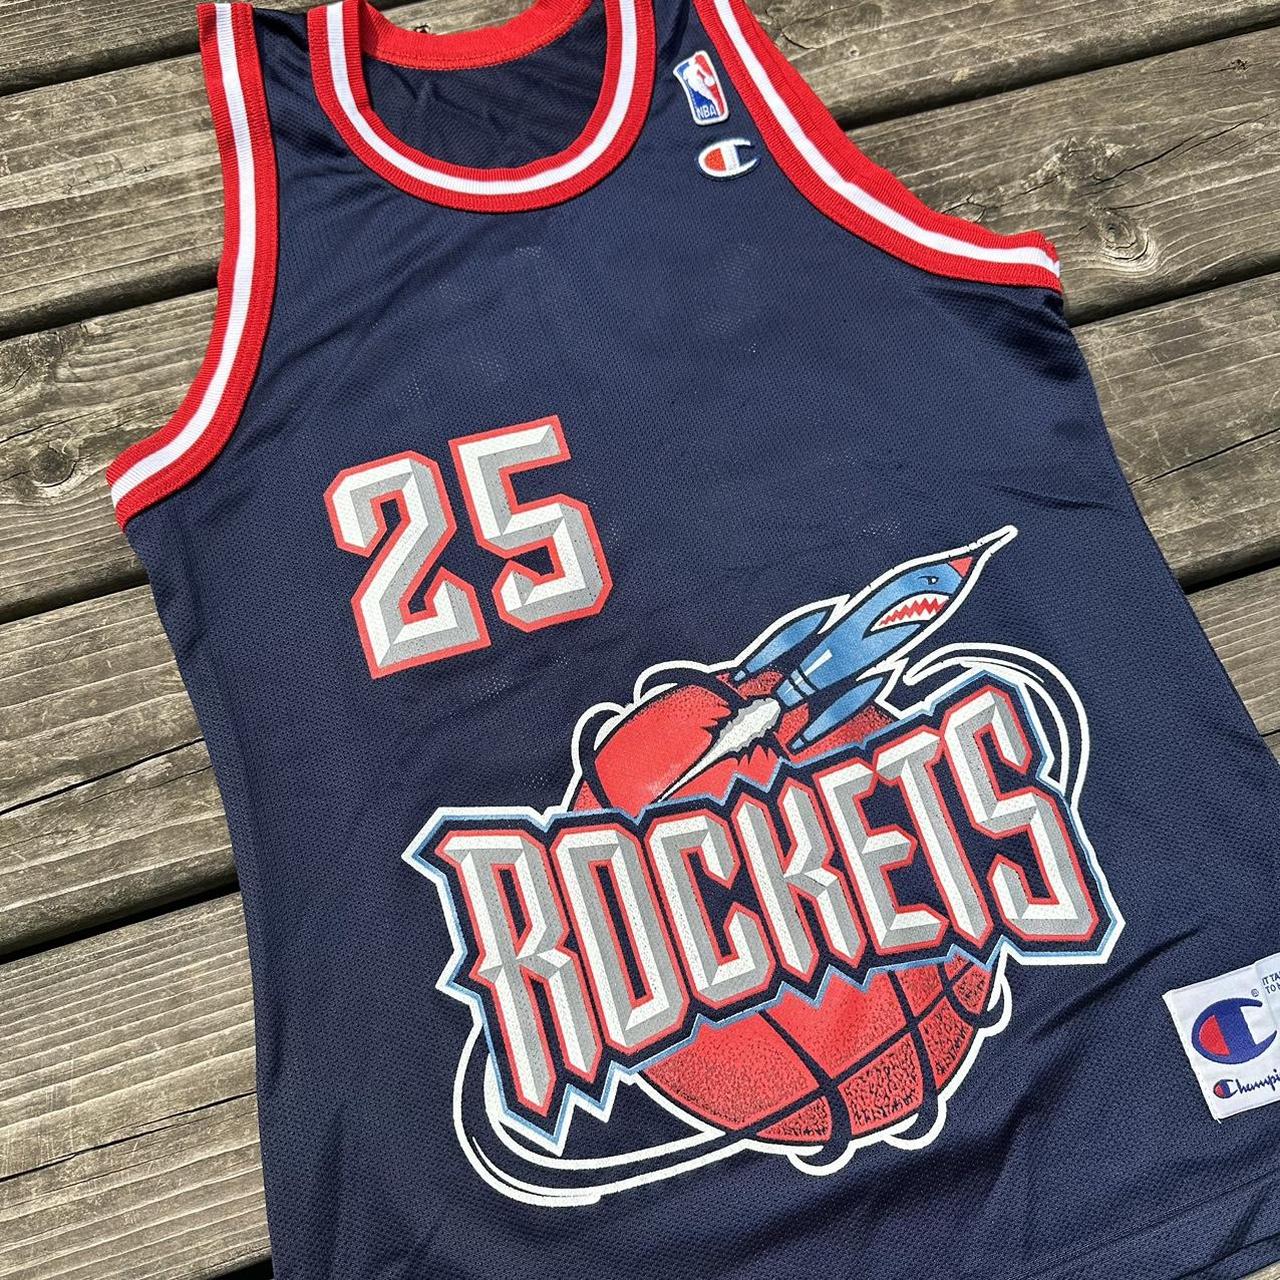 Vintage 90s Champion Houston Rockets Robert Horry - Depop